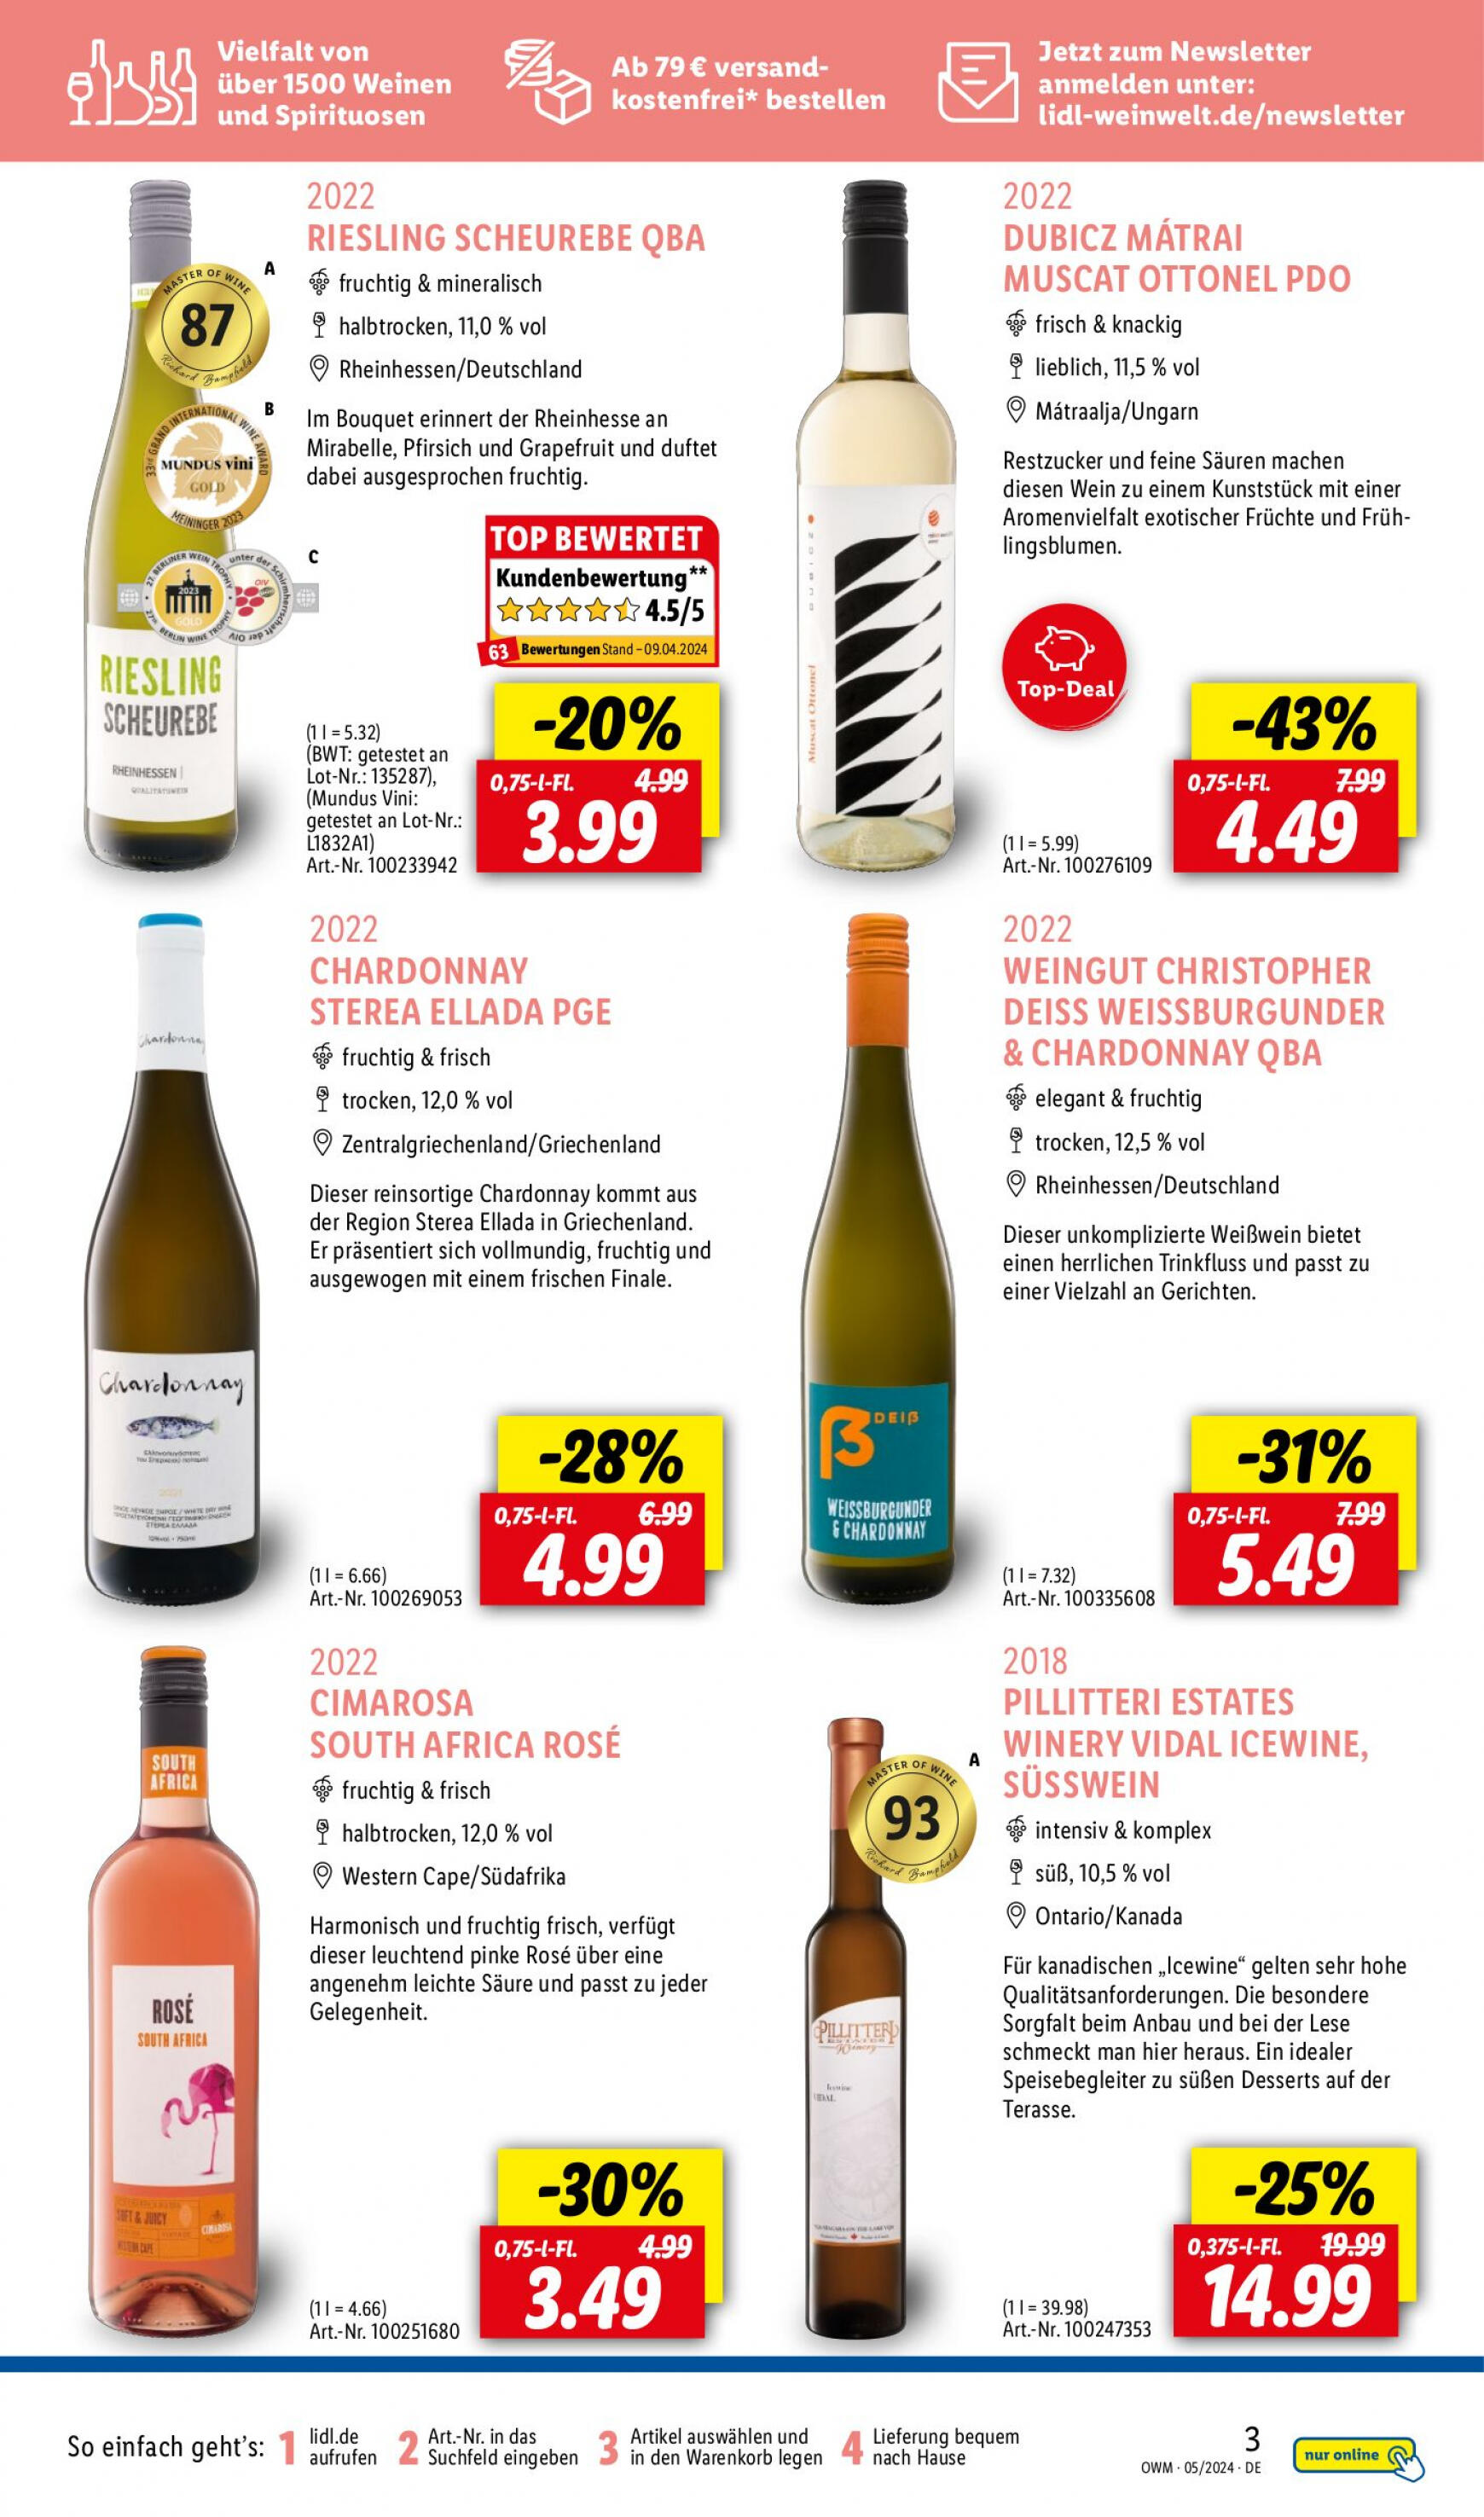 lidl - Flyer Lidl - Highlights in der Weinwelt aktuell 01.05. - 31.05. - page: 3